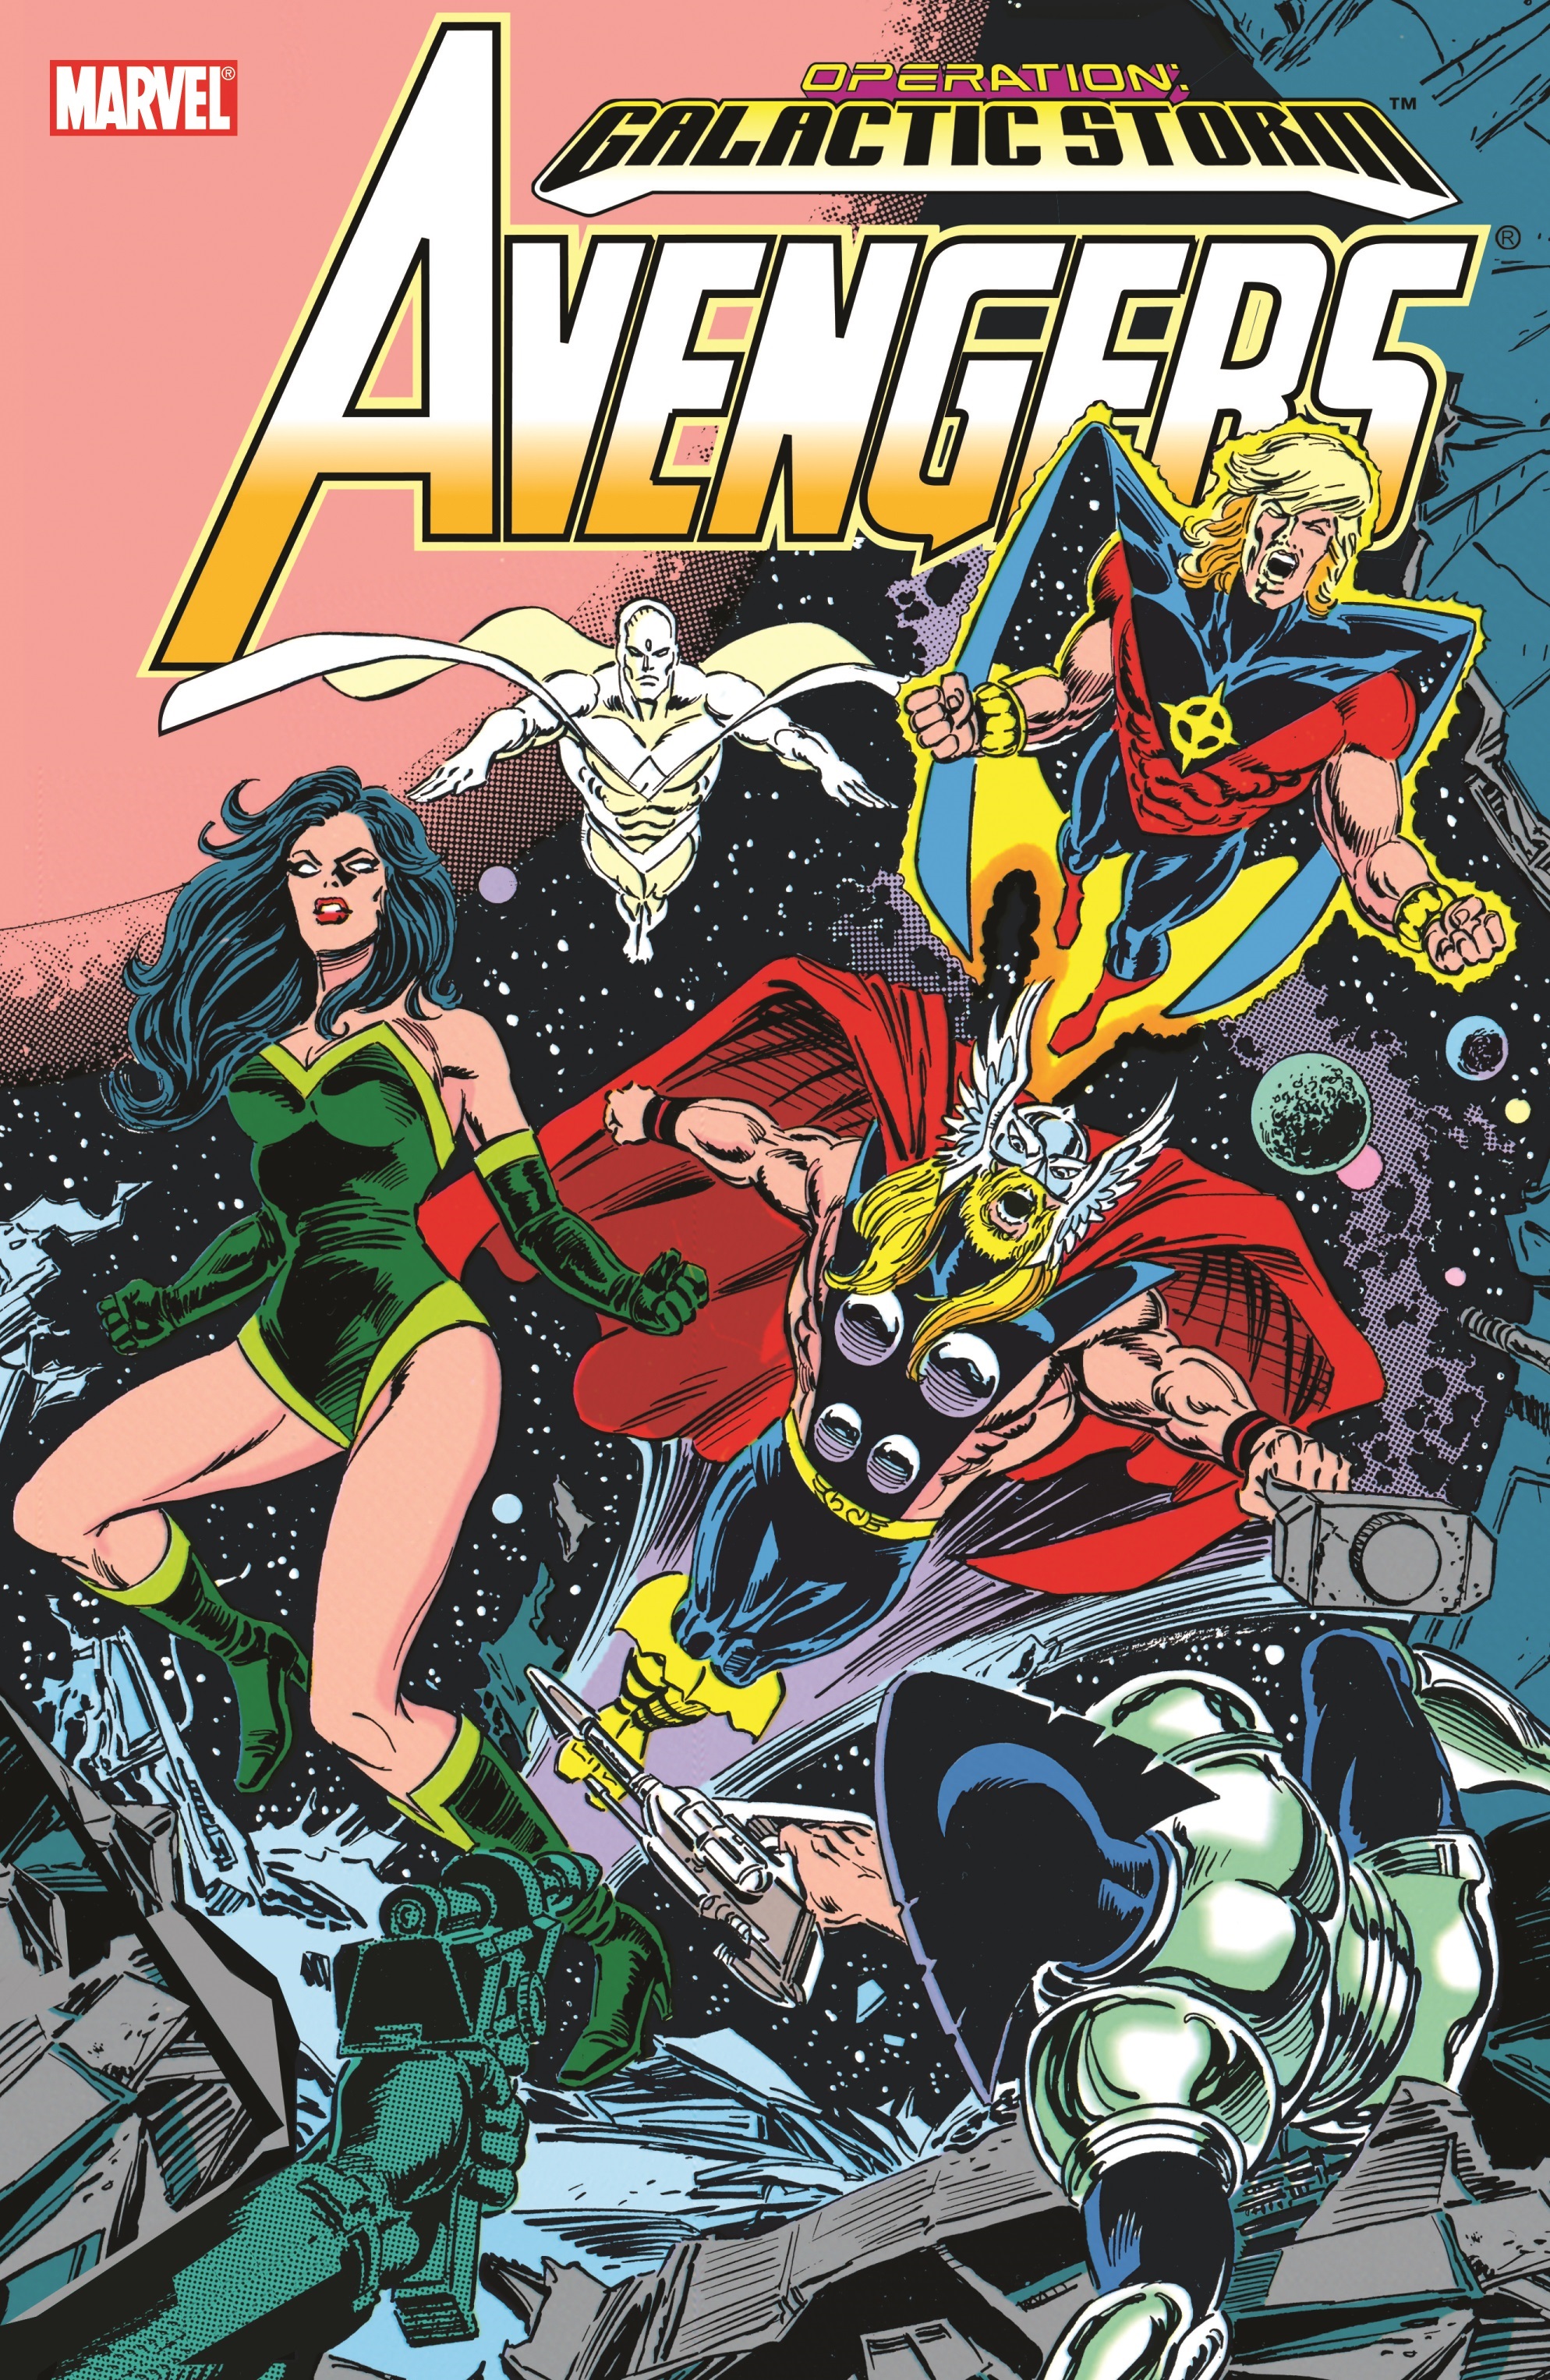 Avengers: Galactic Storm Vol.1 (Trade Paperback)